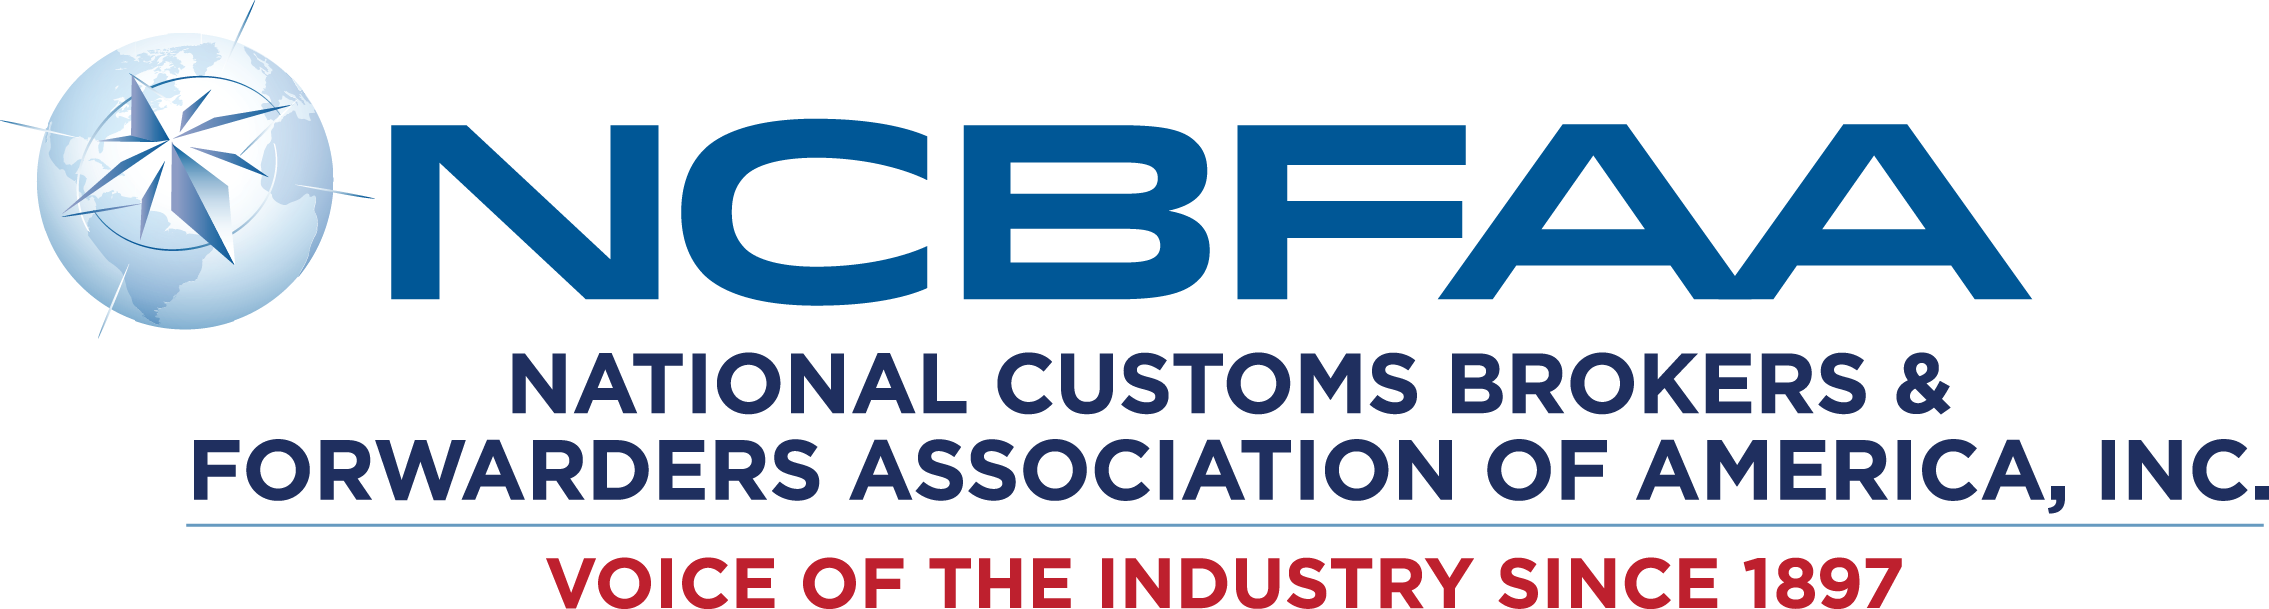 NCBFAA_Logo-Brand_Full-Color